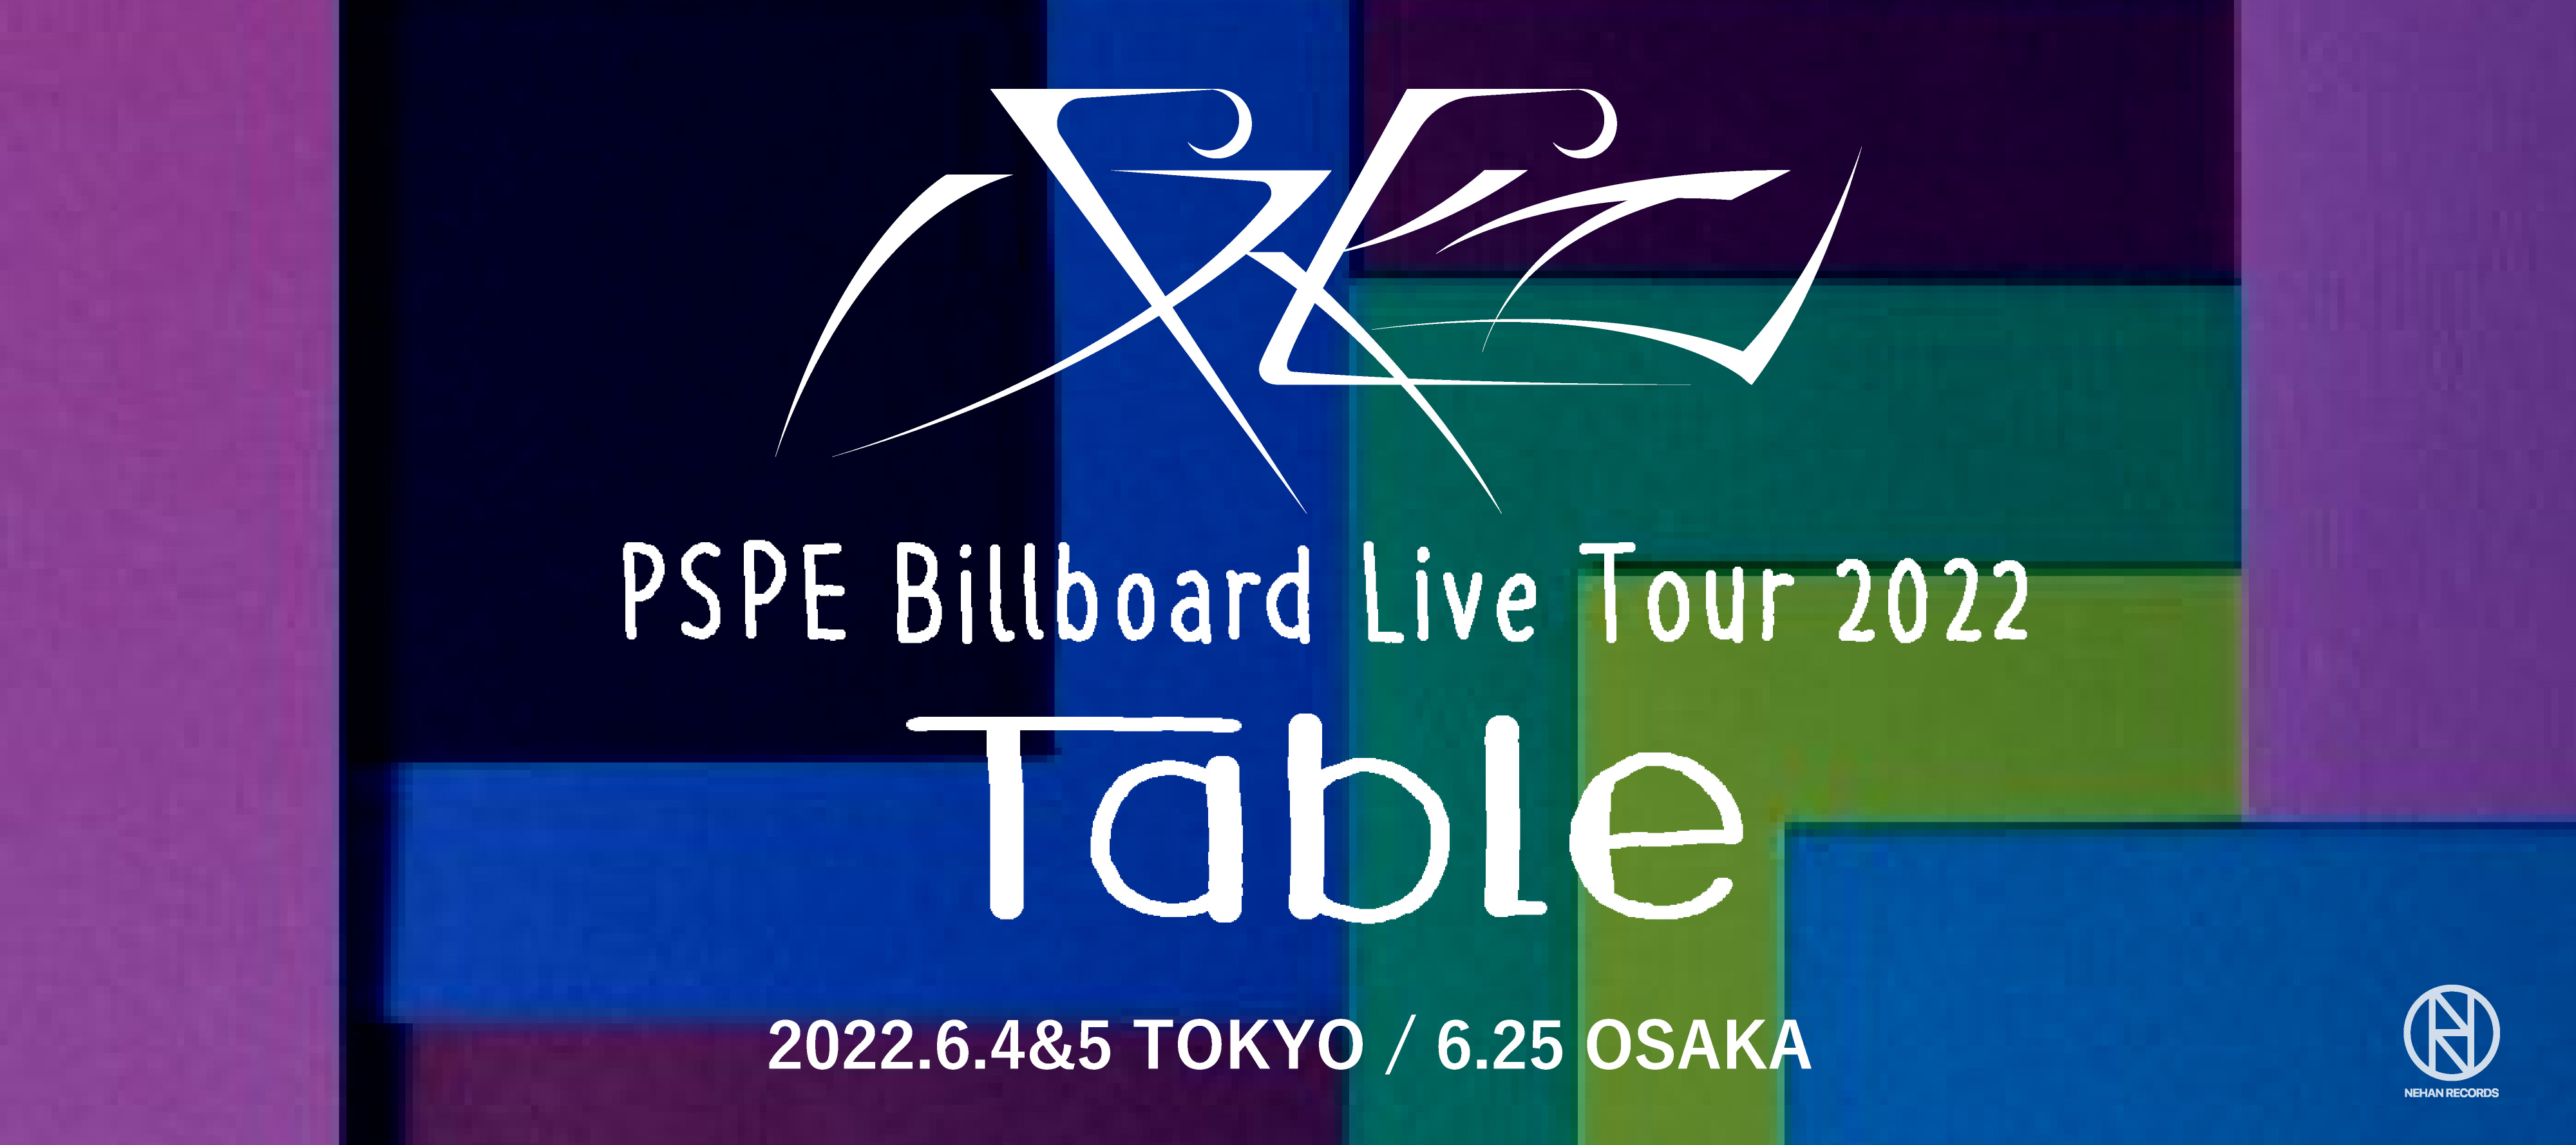 PSPE Billboard Live Tour 2022 “table”